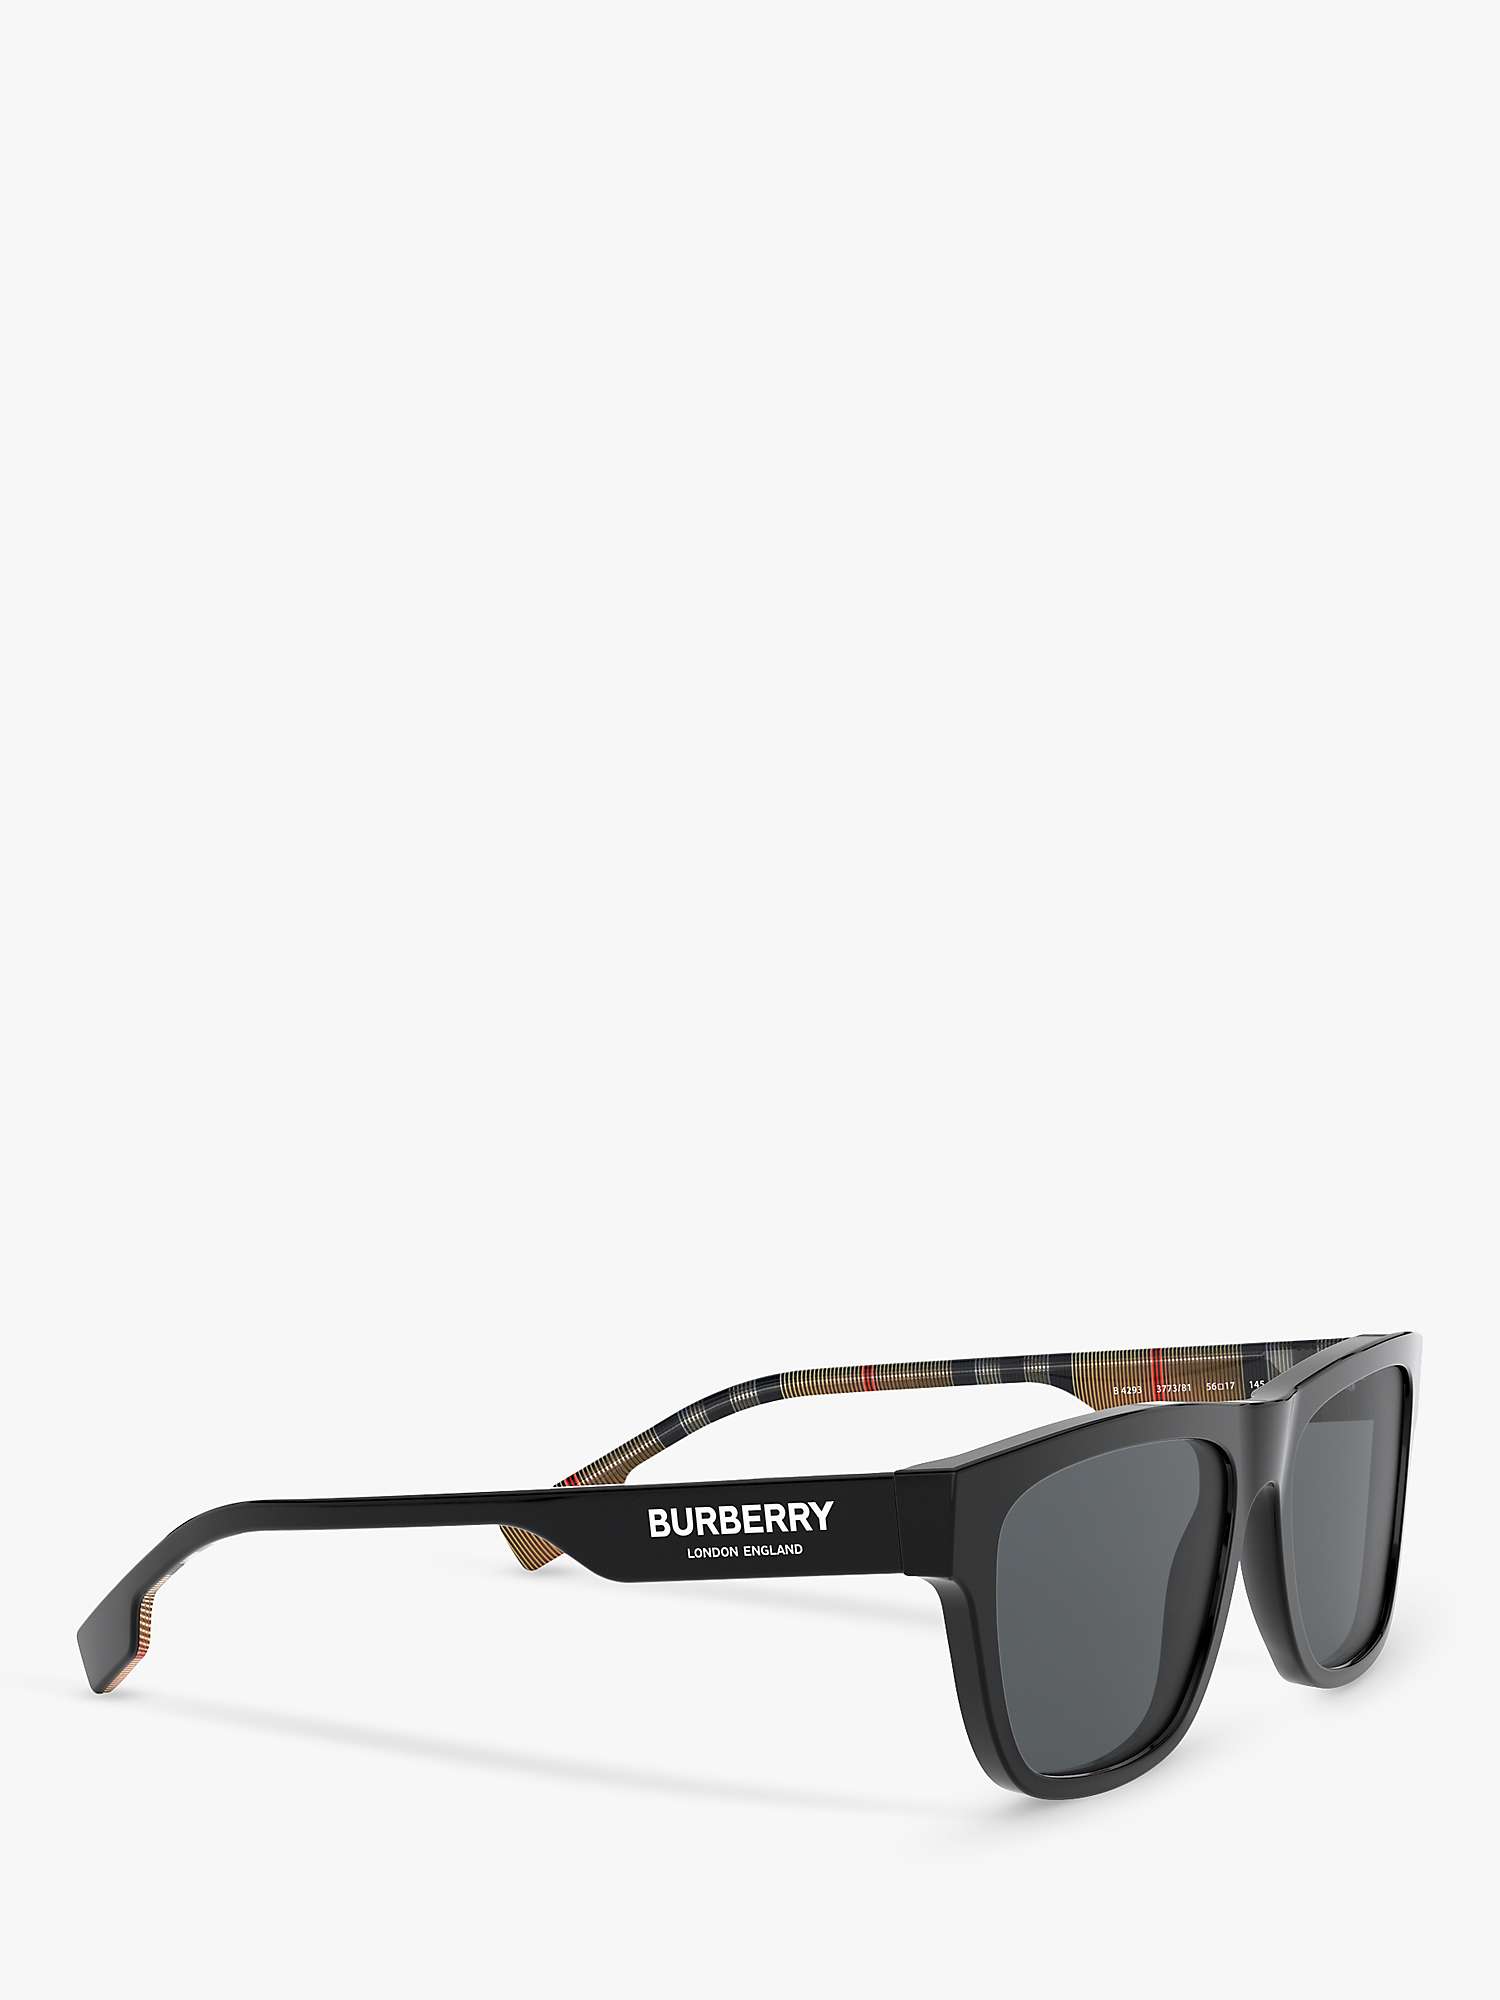 Buy Burberry BE4293 Men's Polarised Square Sunglasses, Black/Grey Online at johnlewis.com